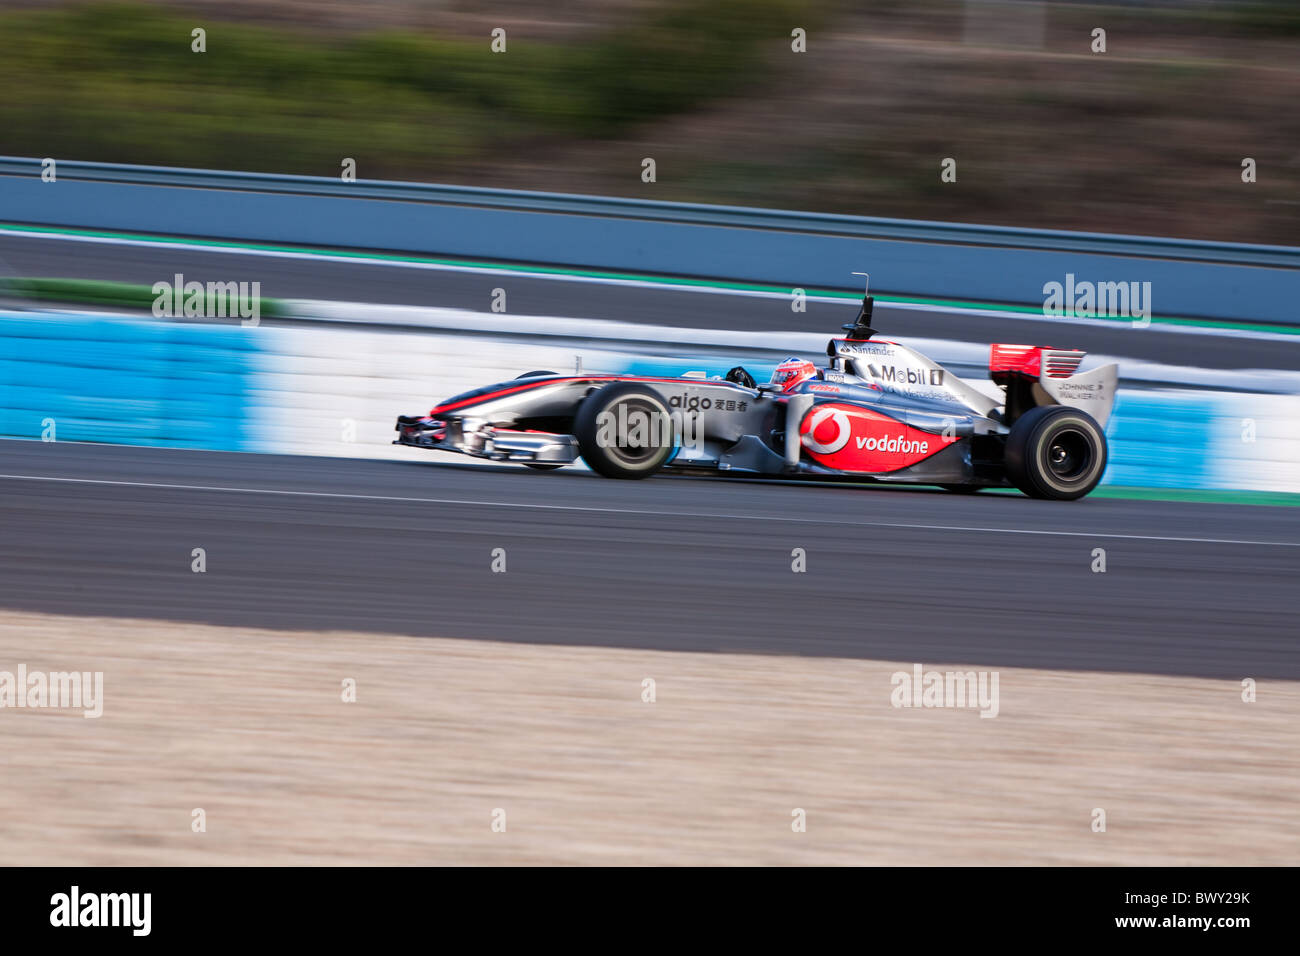 Formula 1 Jerez racing circuit motorsport lifetimes panning Test VODAFONE MCLAREN MERCEDES auto automobile blur blurred panning Stock Photo